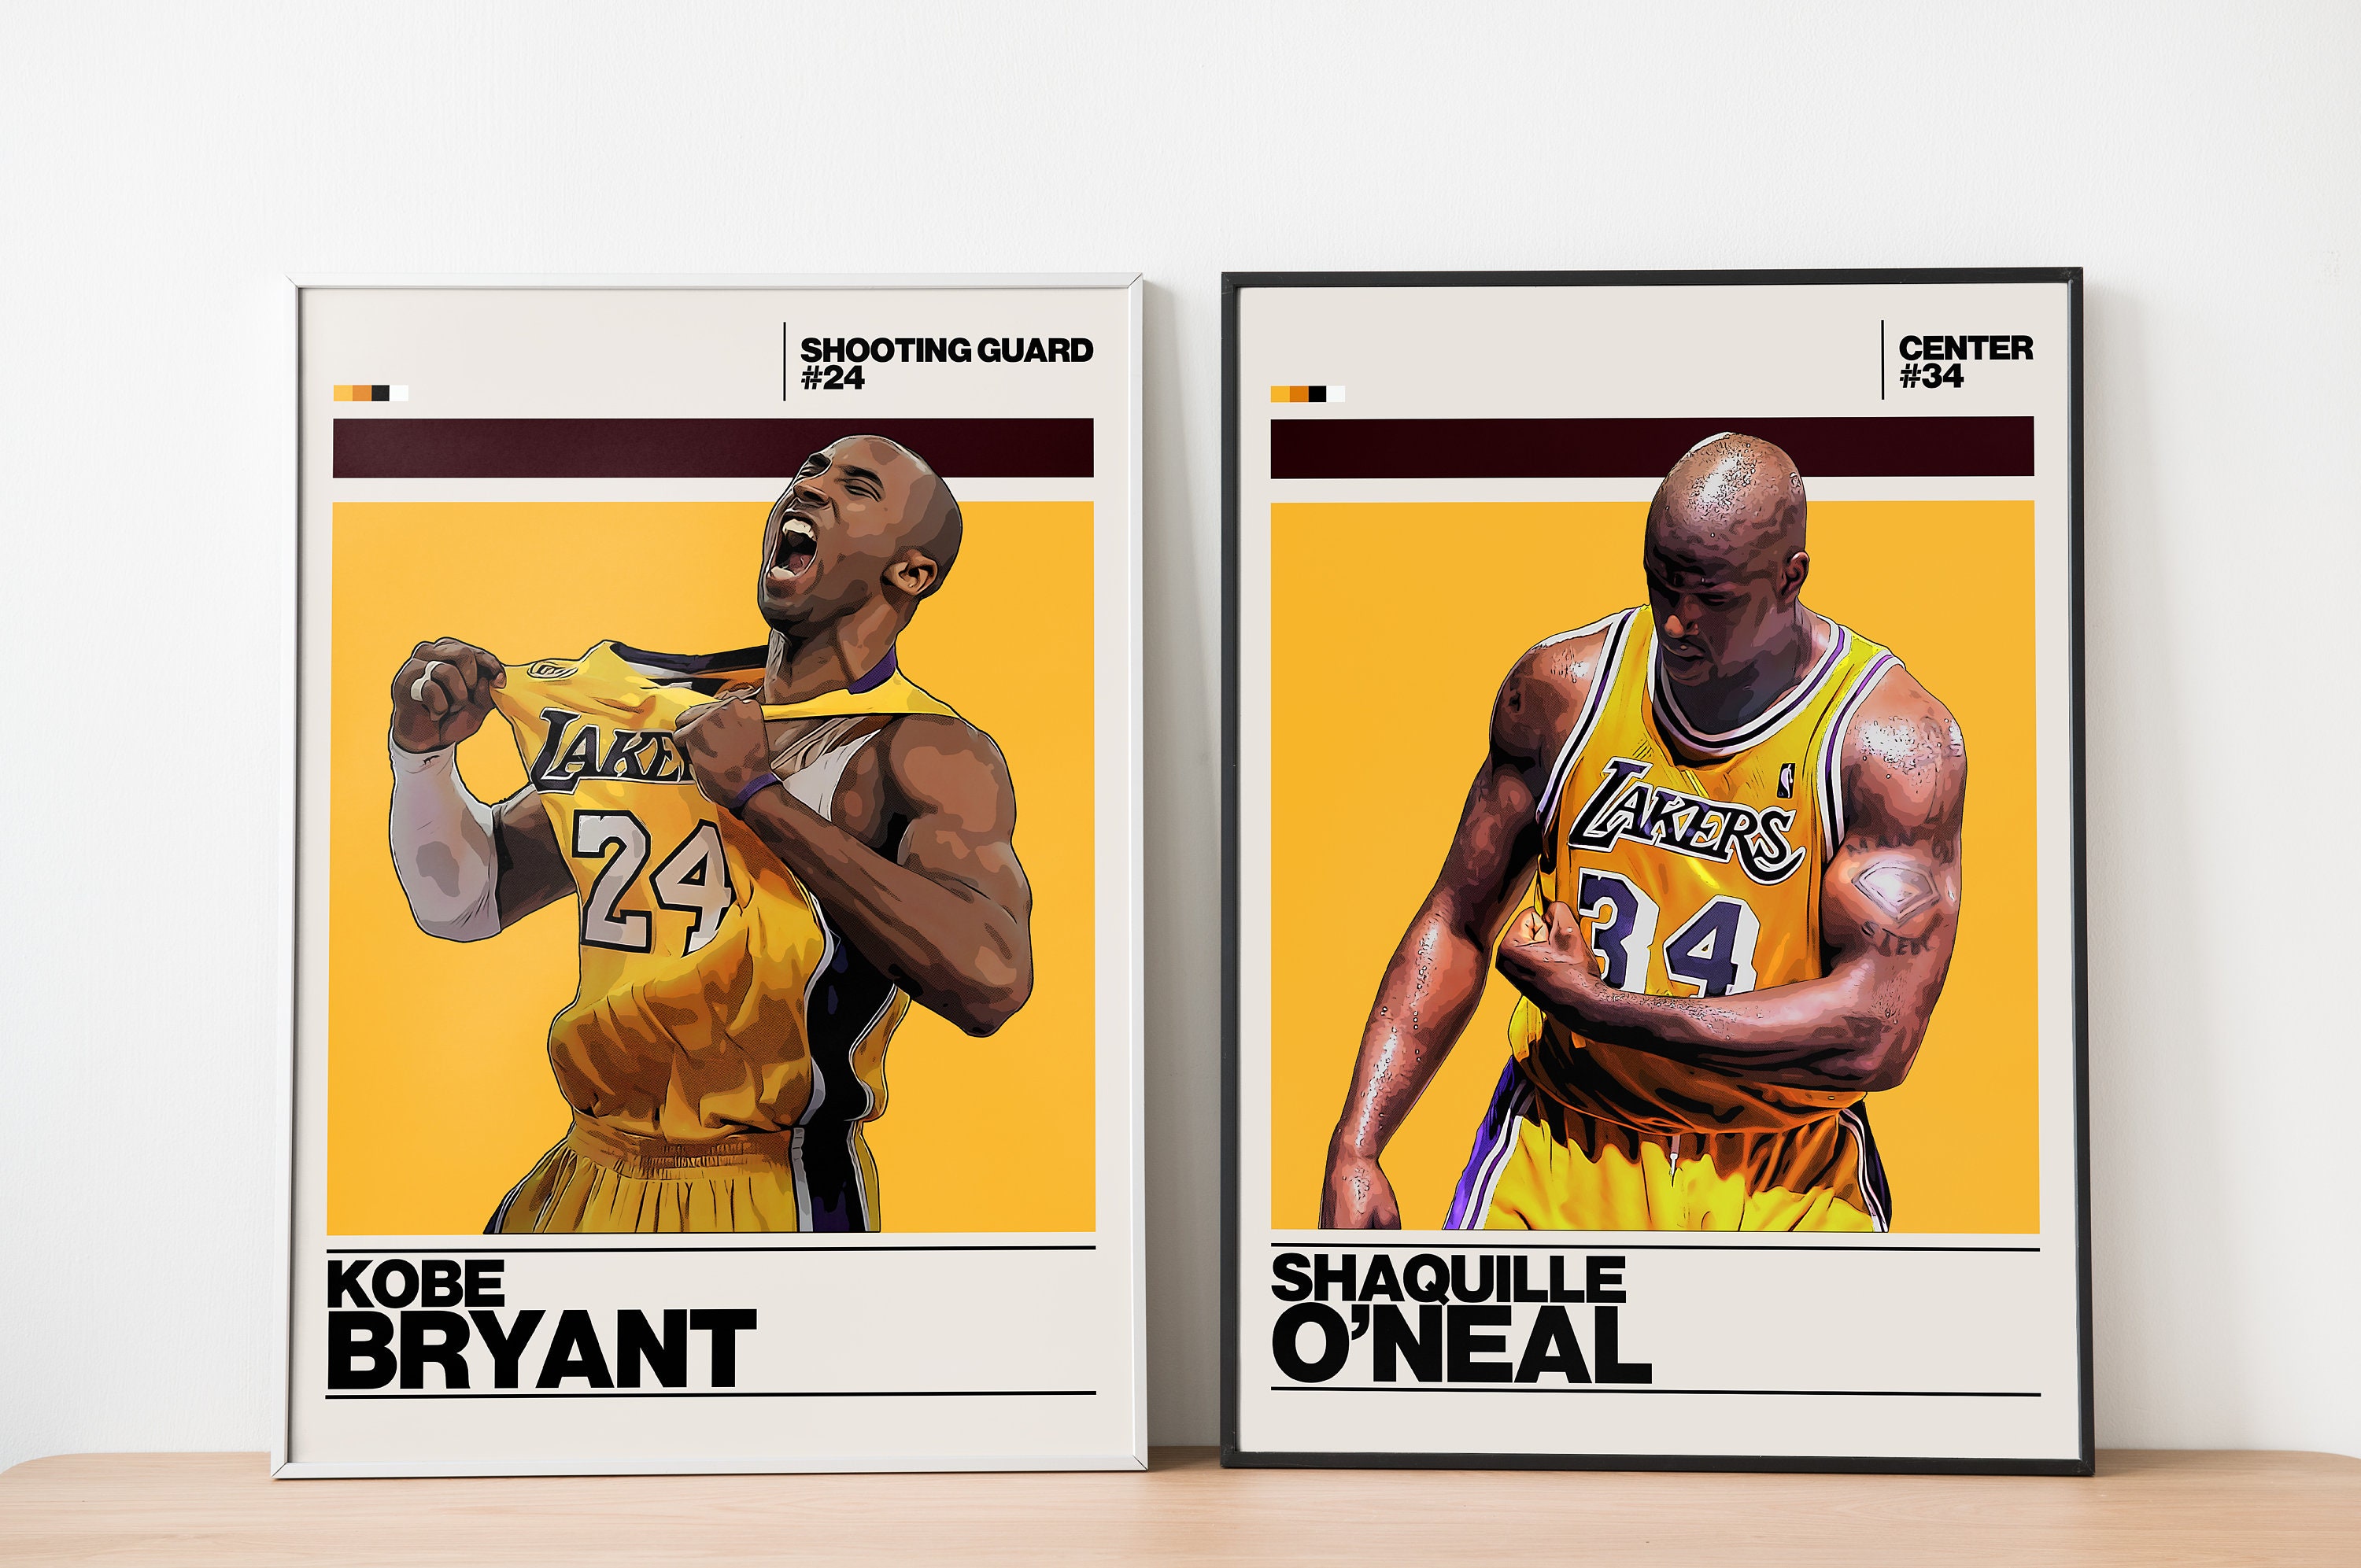 Jordan Kobe Bryant Lebron Basketball Poster - Posters, Prints & Paintings, Facebook Marketplace